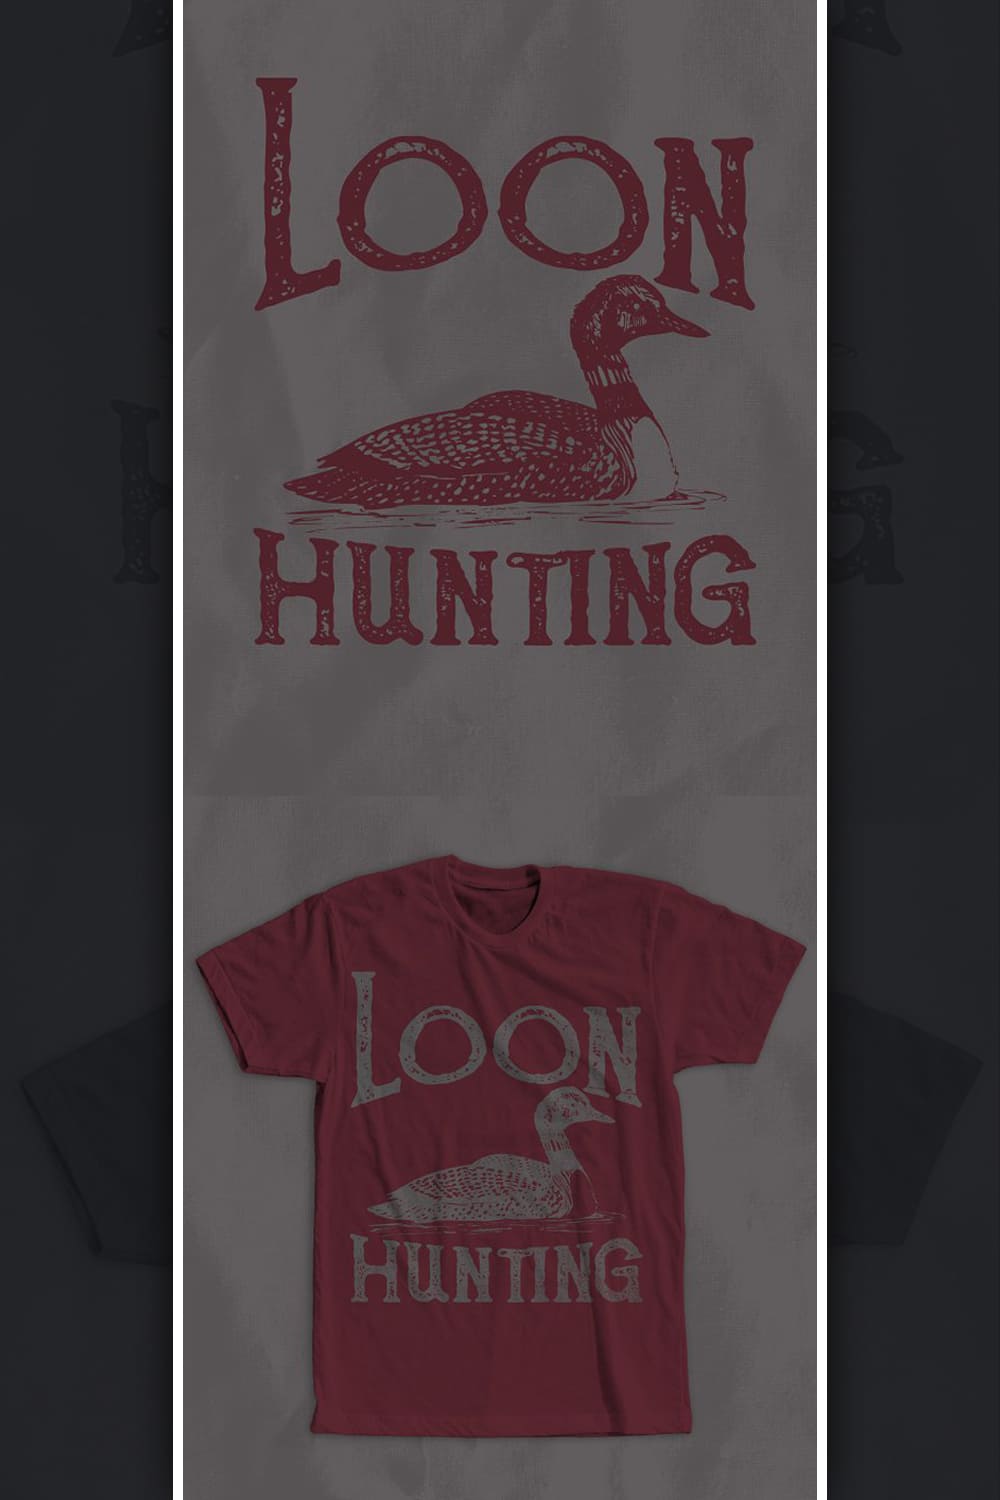 Loon Hunting T-Shirt Design - Pinterest.